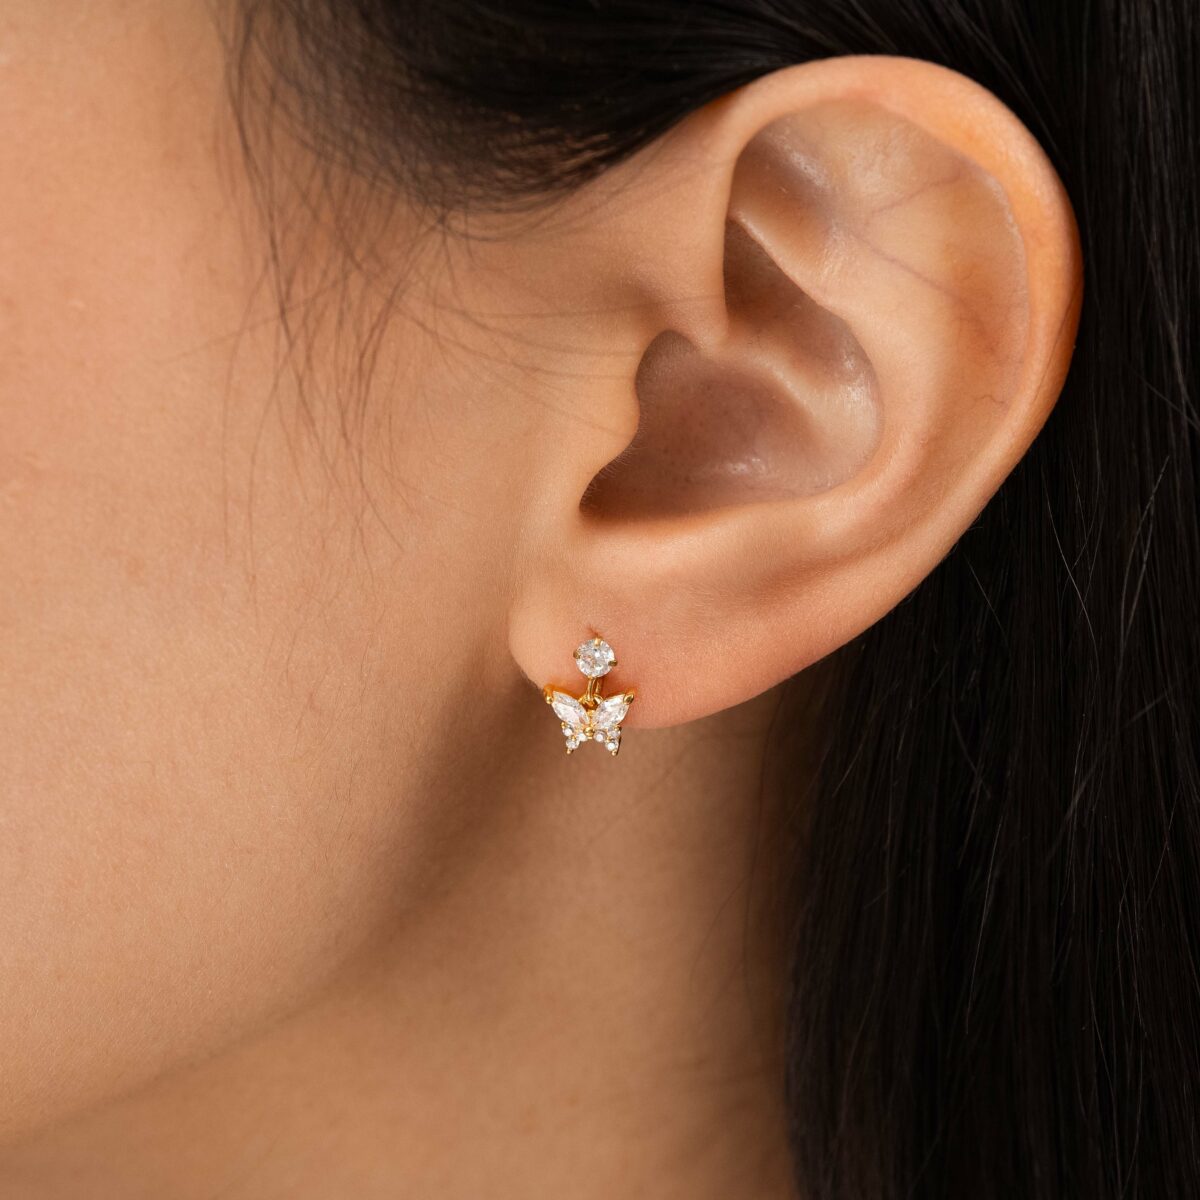 https://m.clubbella.co/product/papillon-earrings-24-k-gold-plated/ PAPILLON EARRINGS (5)